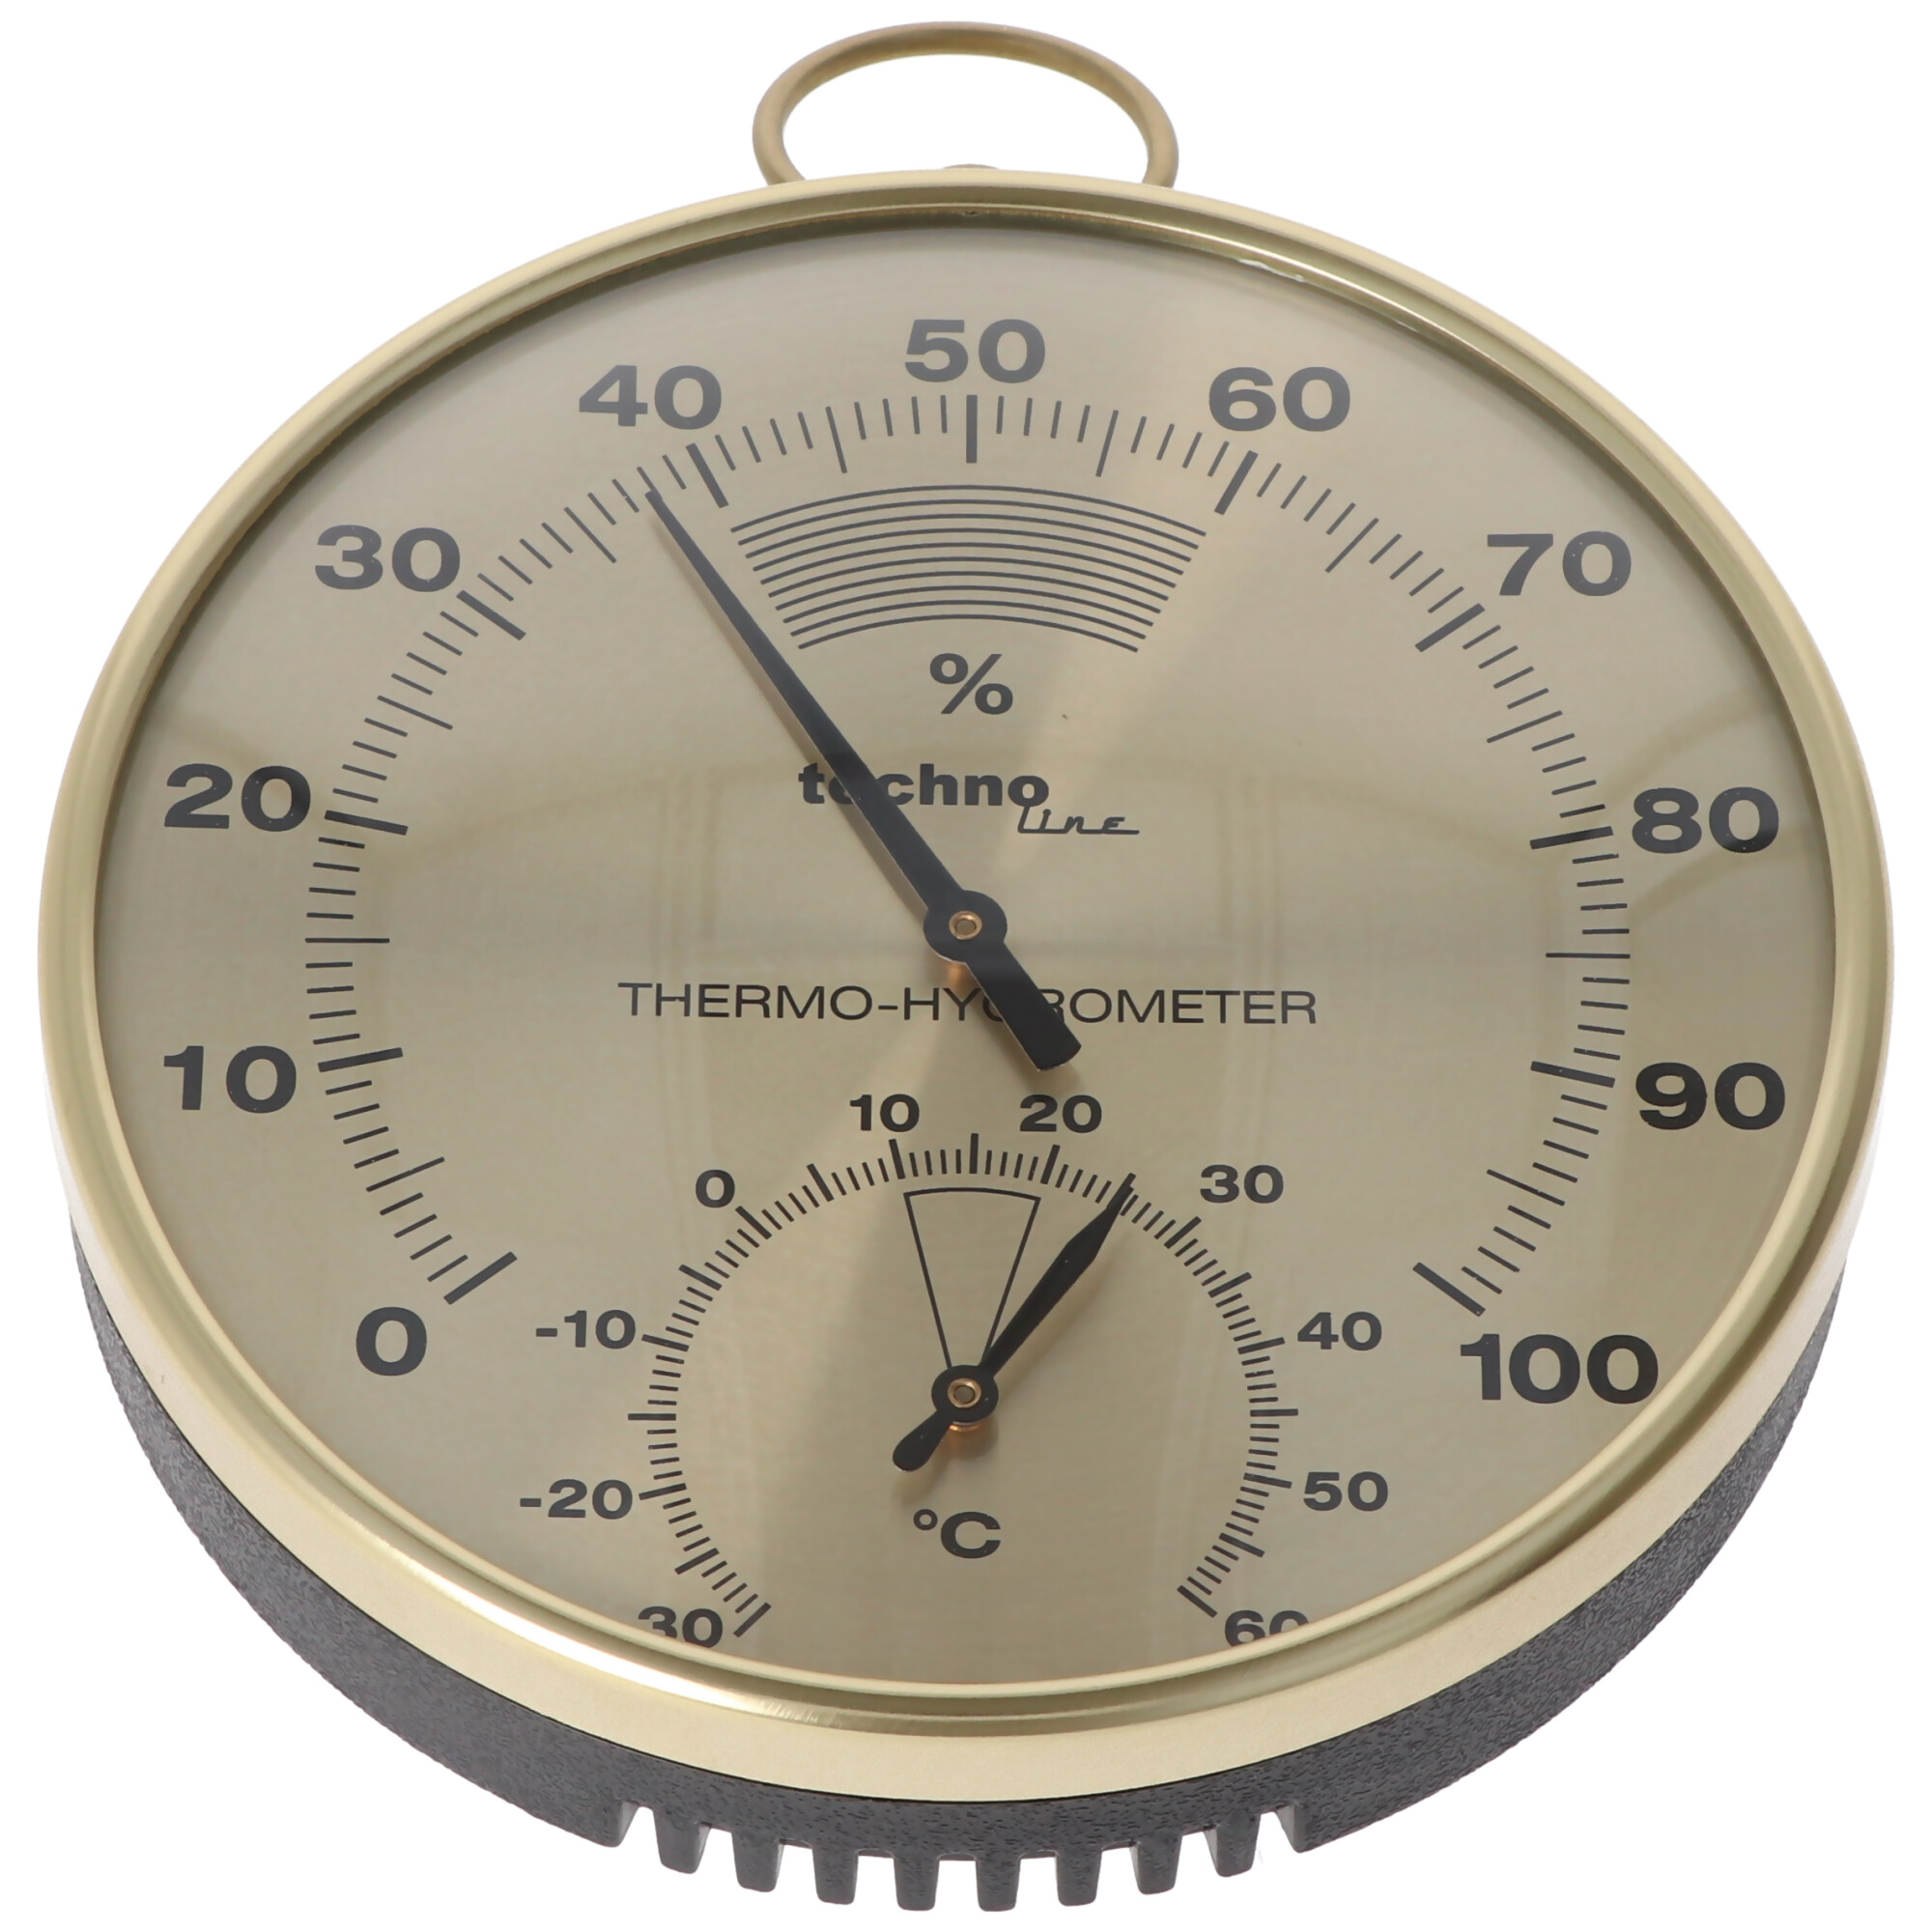 Technoline WA 3055 - edles Thermo-HygroMeter im Messing Design